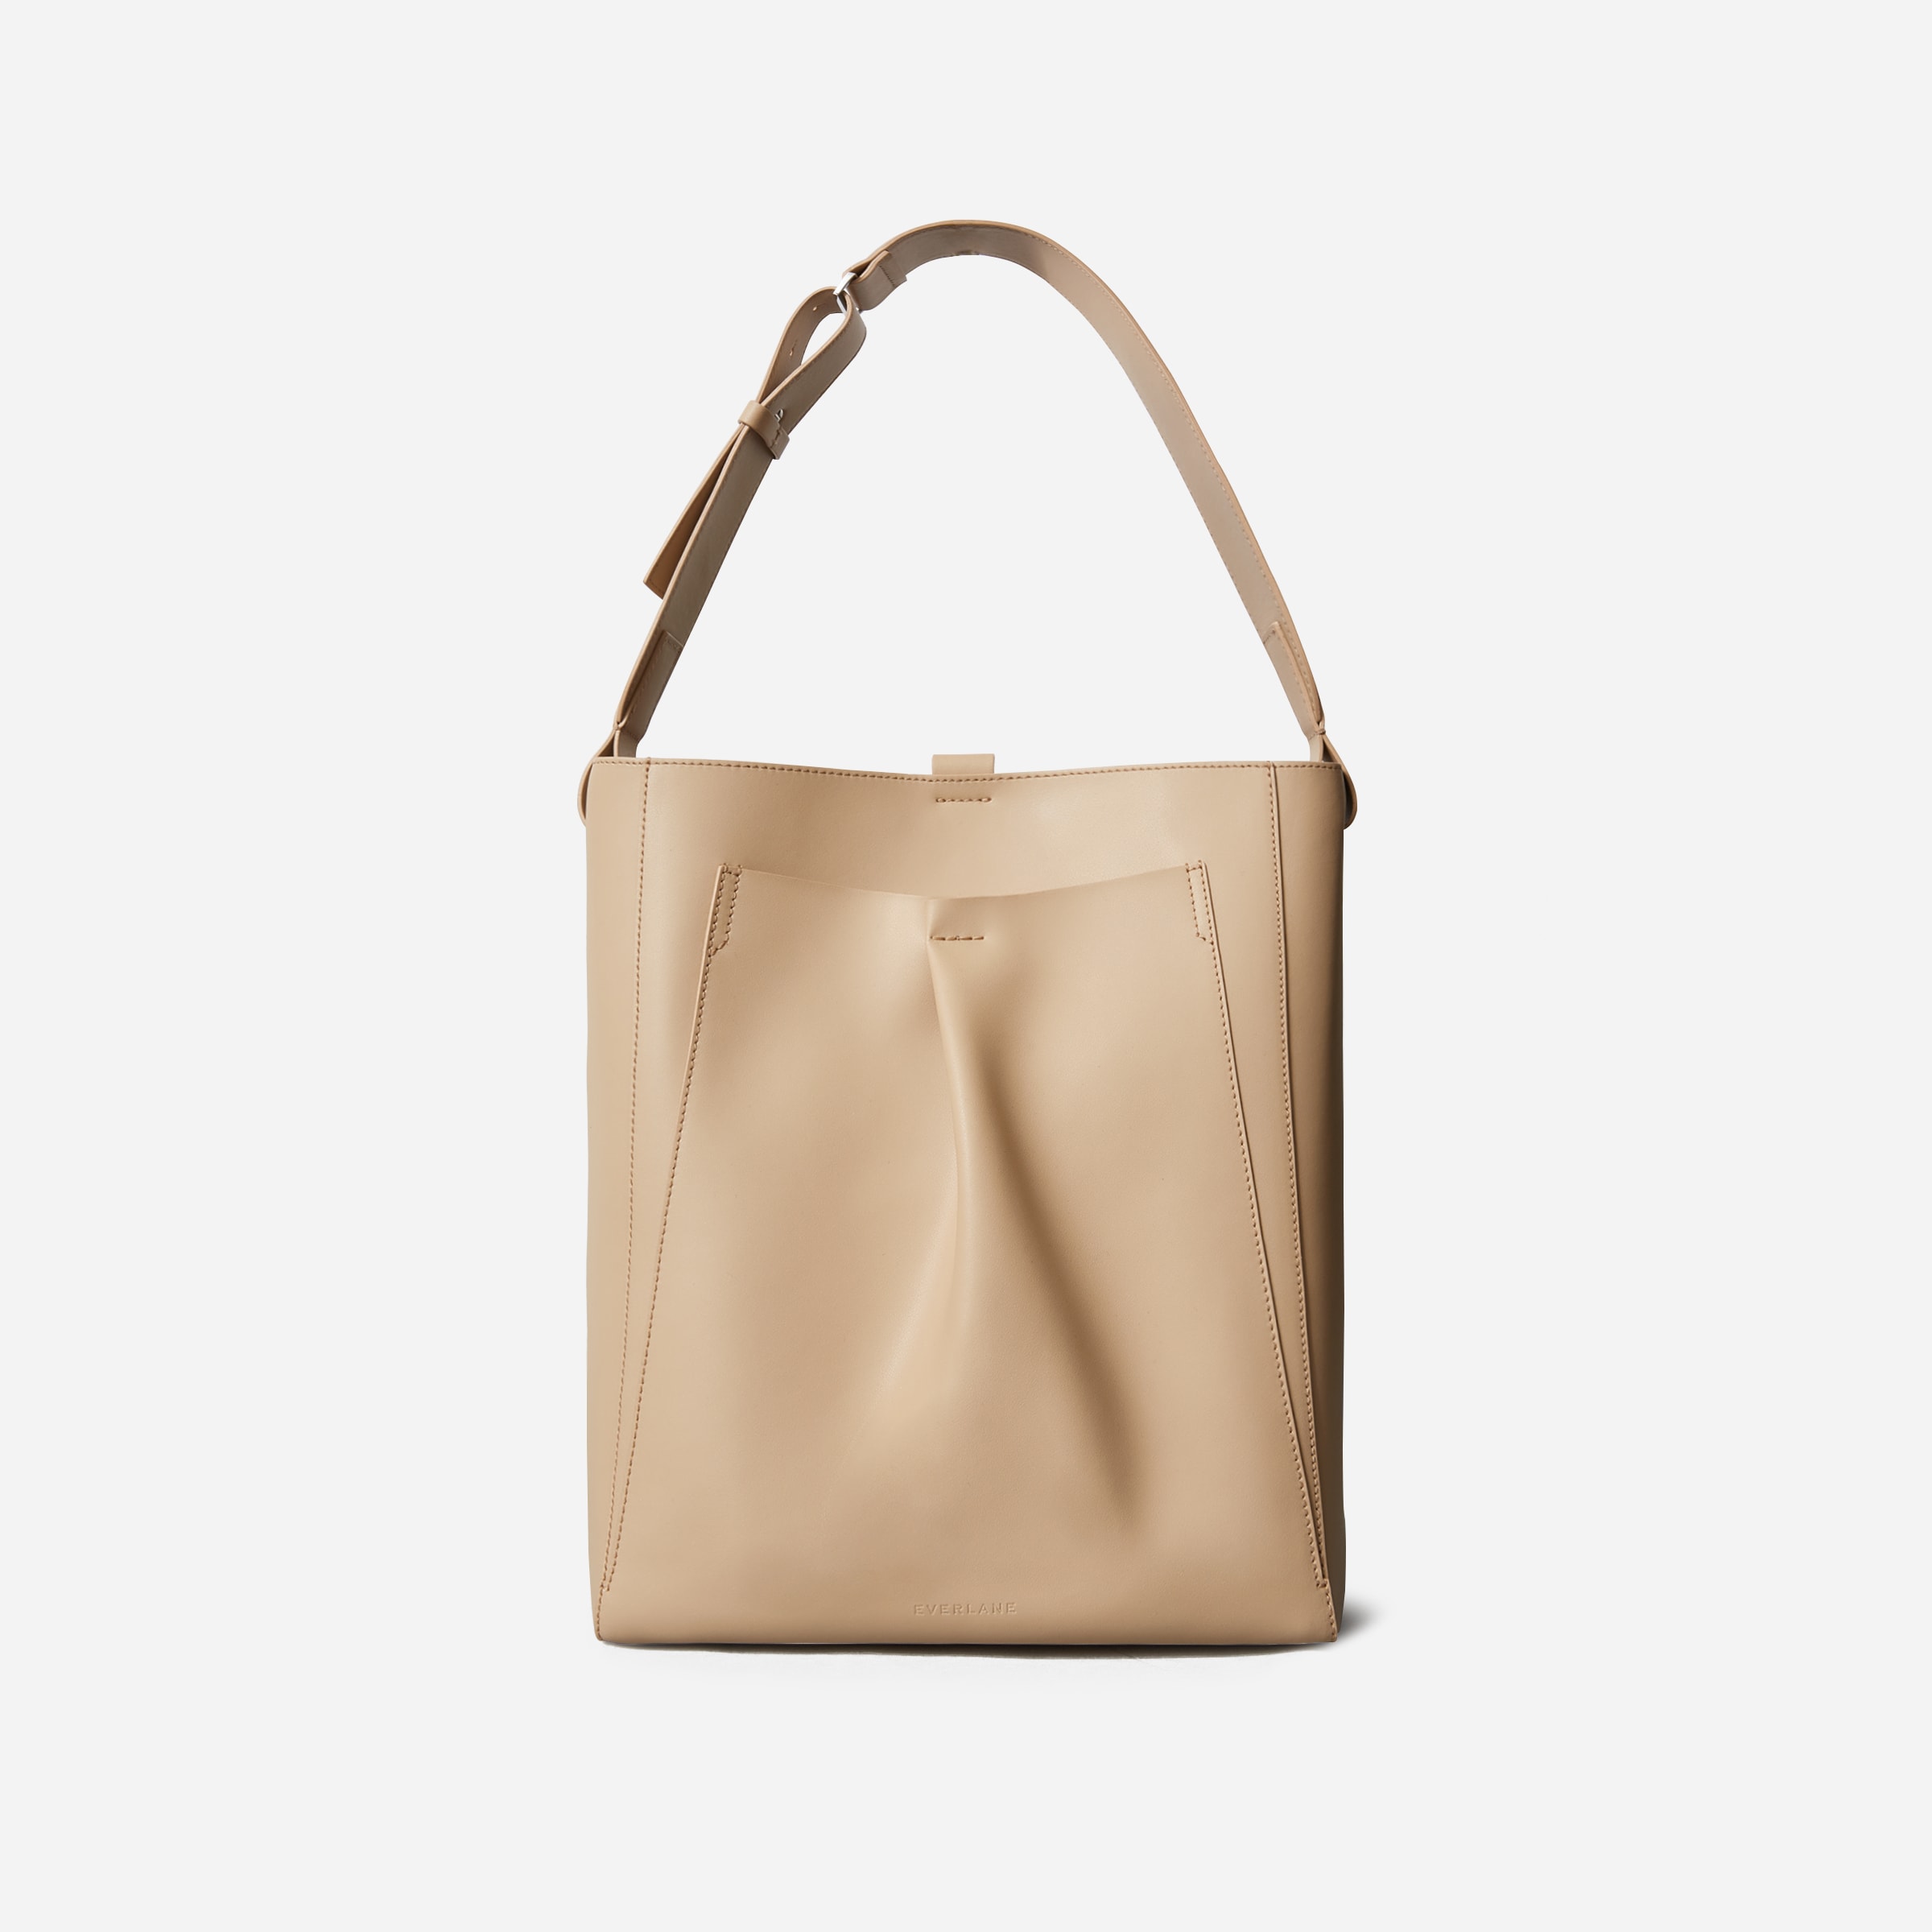 Dooney & Bourke Taupe Leather Handbag - Worth Repeating